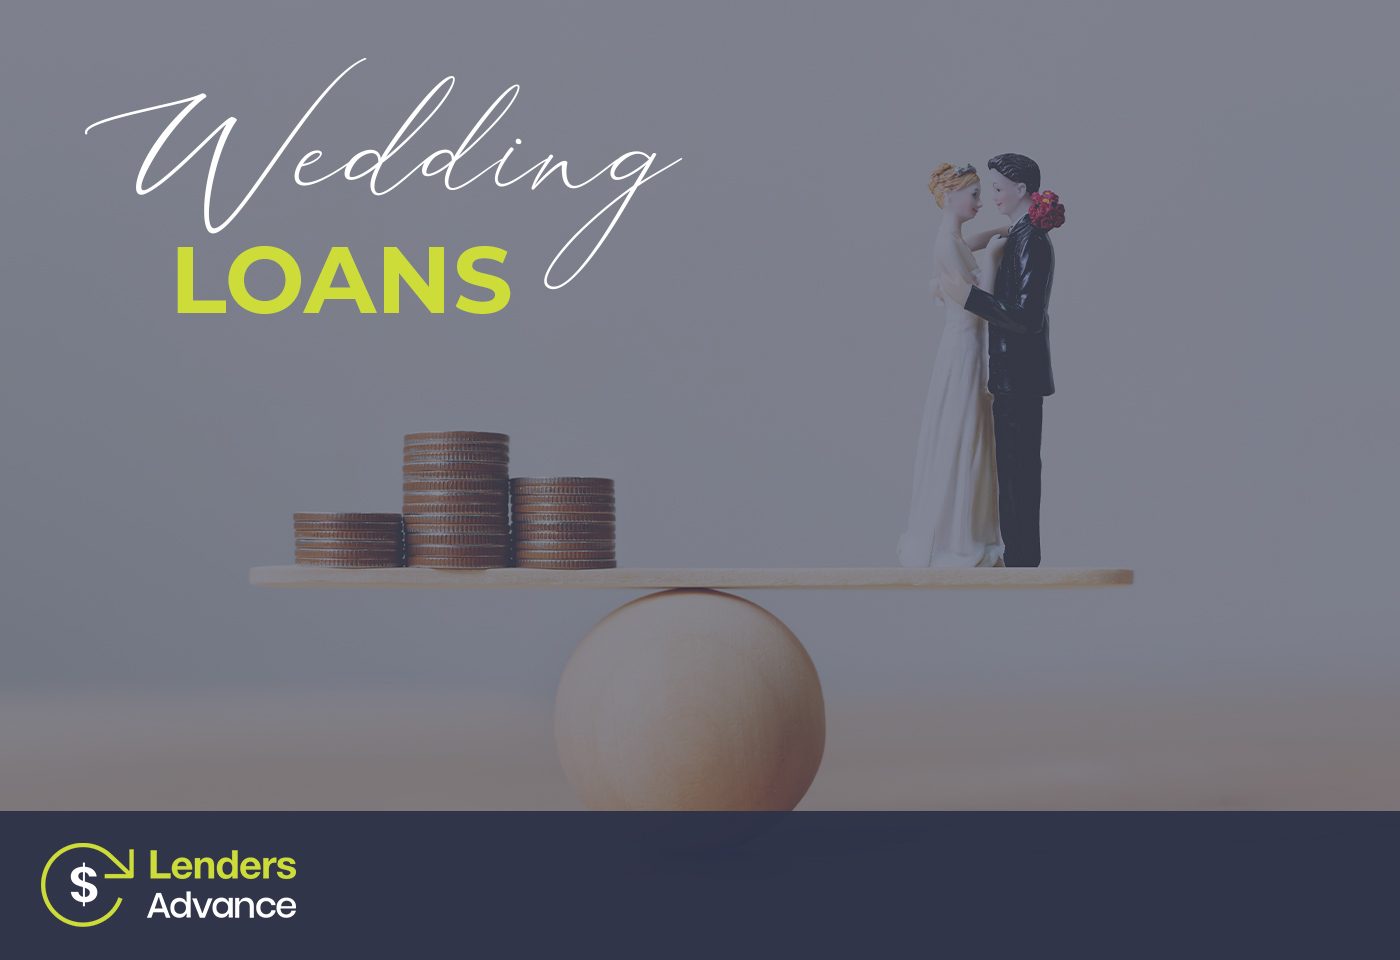 Wedding Loans For Bad Credit 